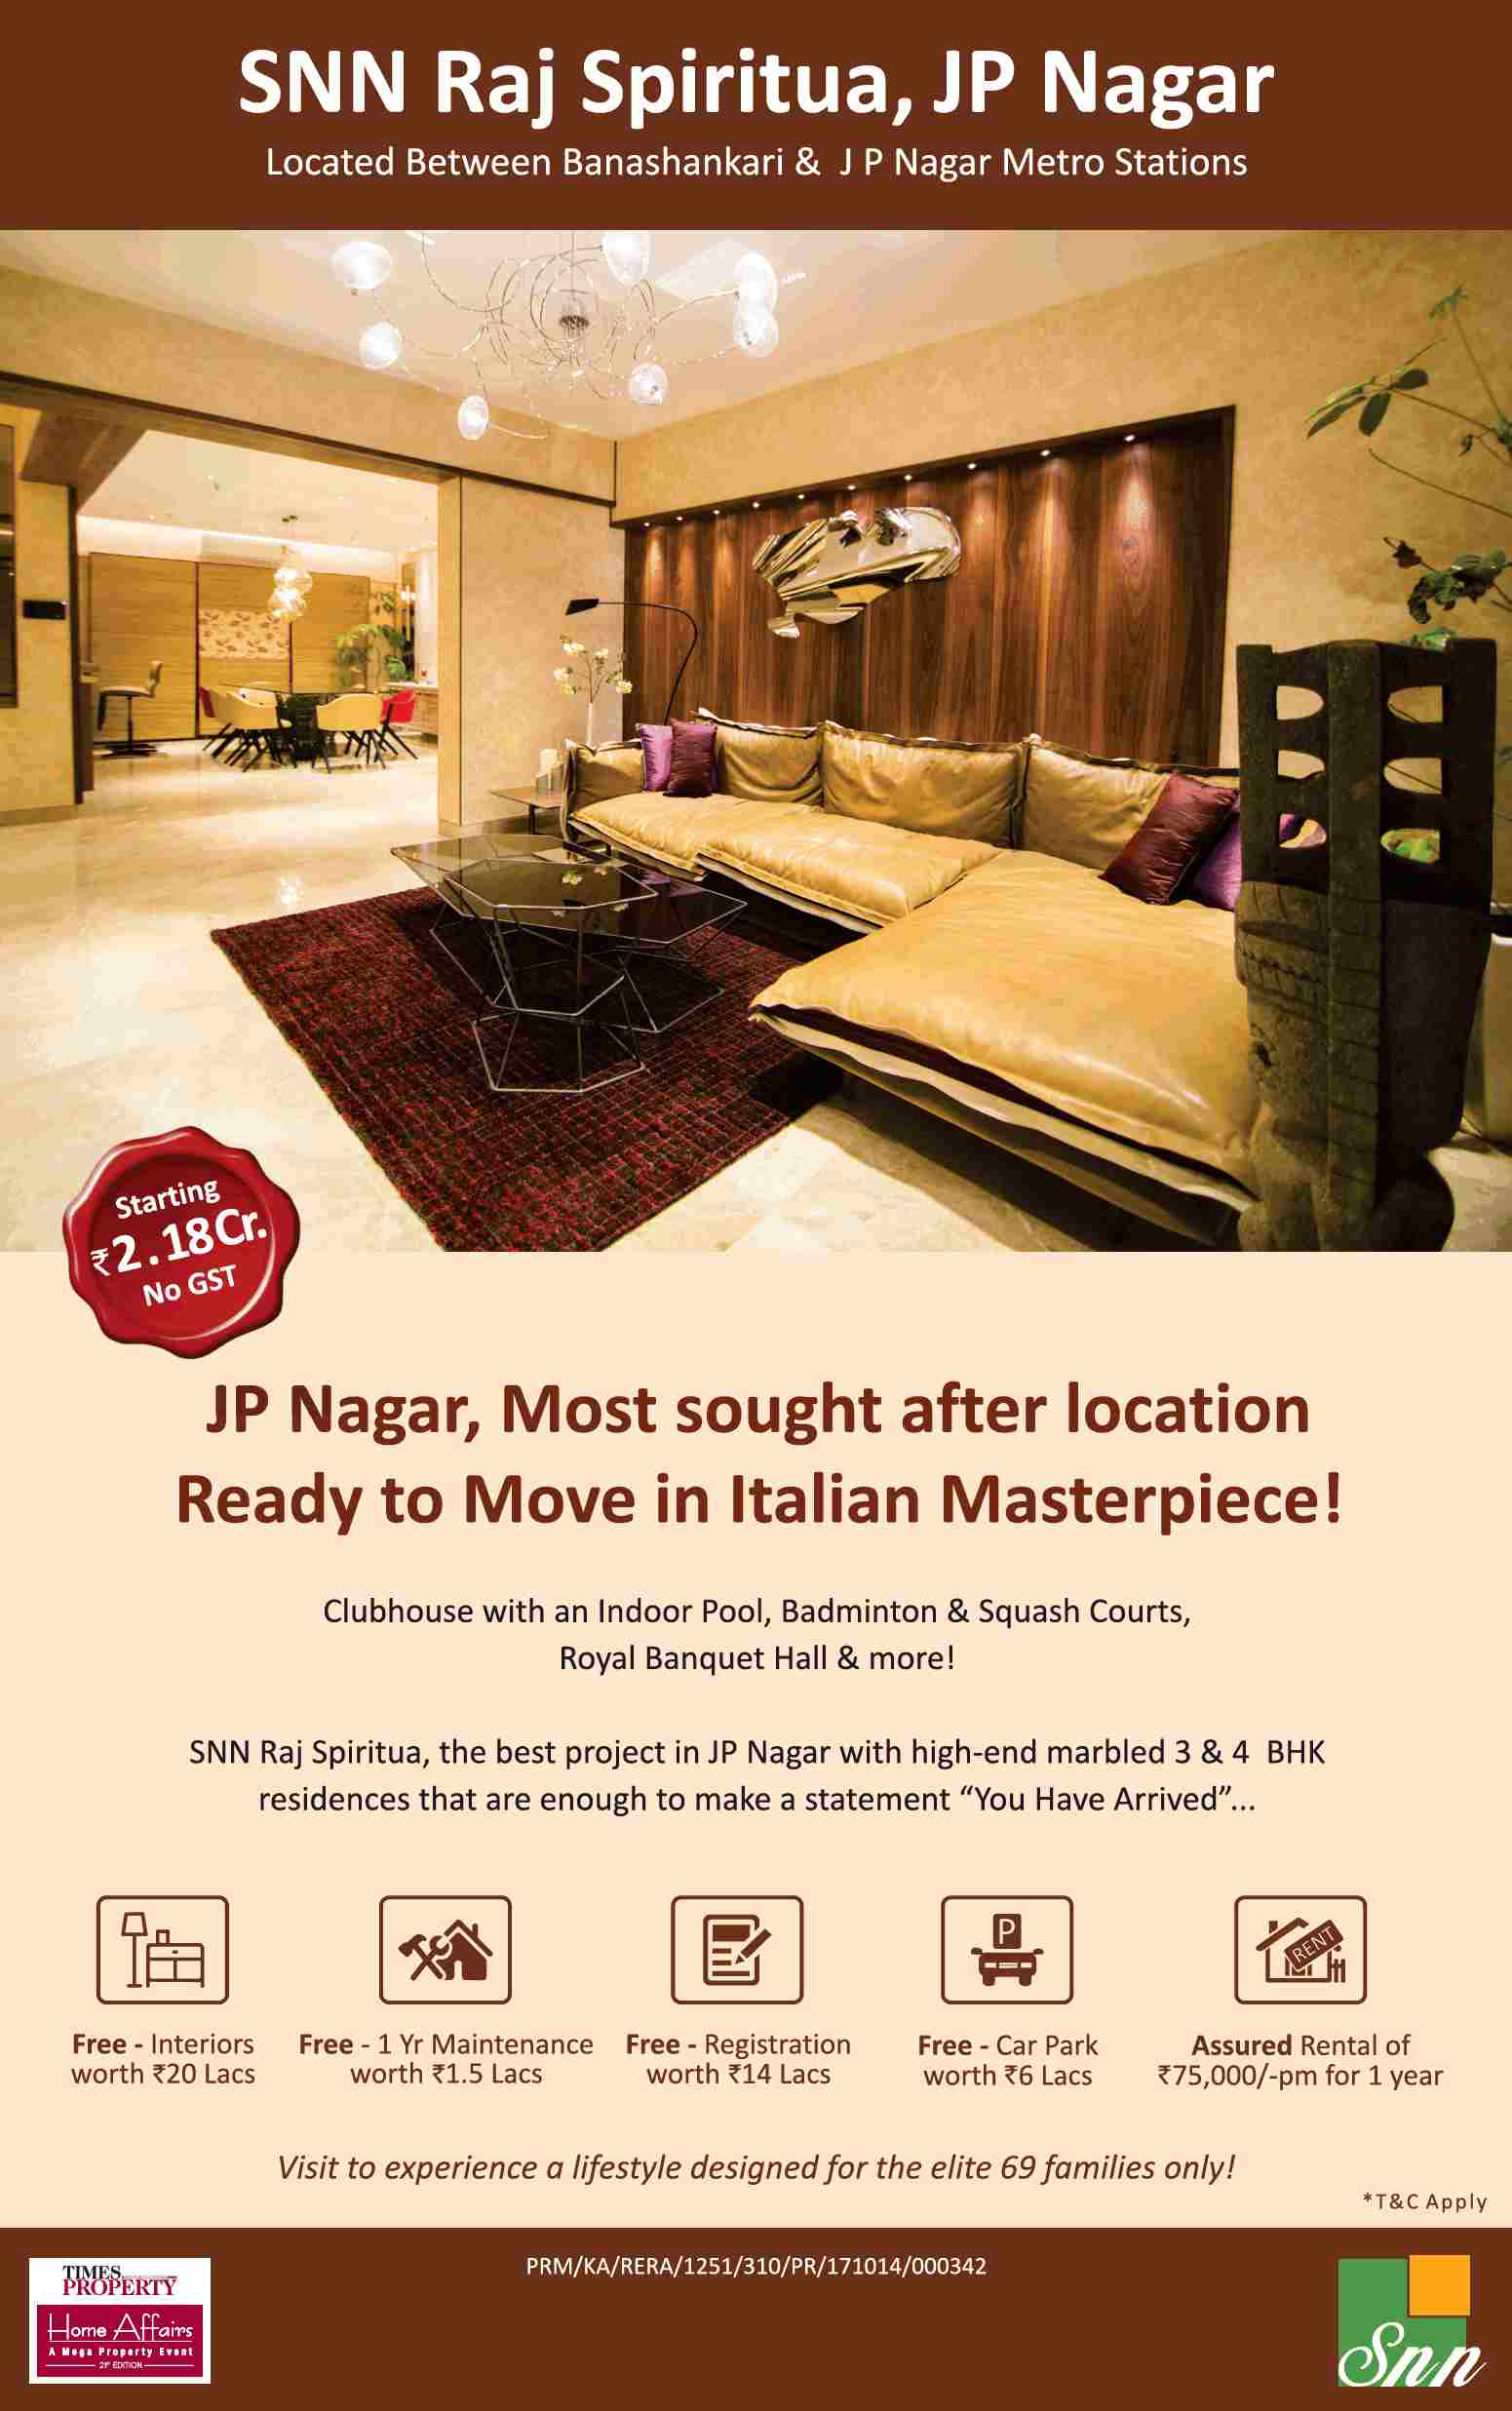 Get assured rental of Rs 75000 per month for 1 year at SNN Raj Spiritua in Bangalore Update